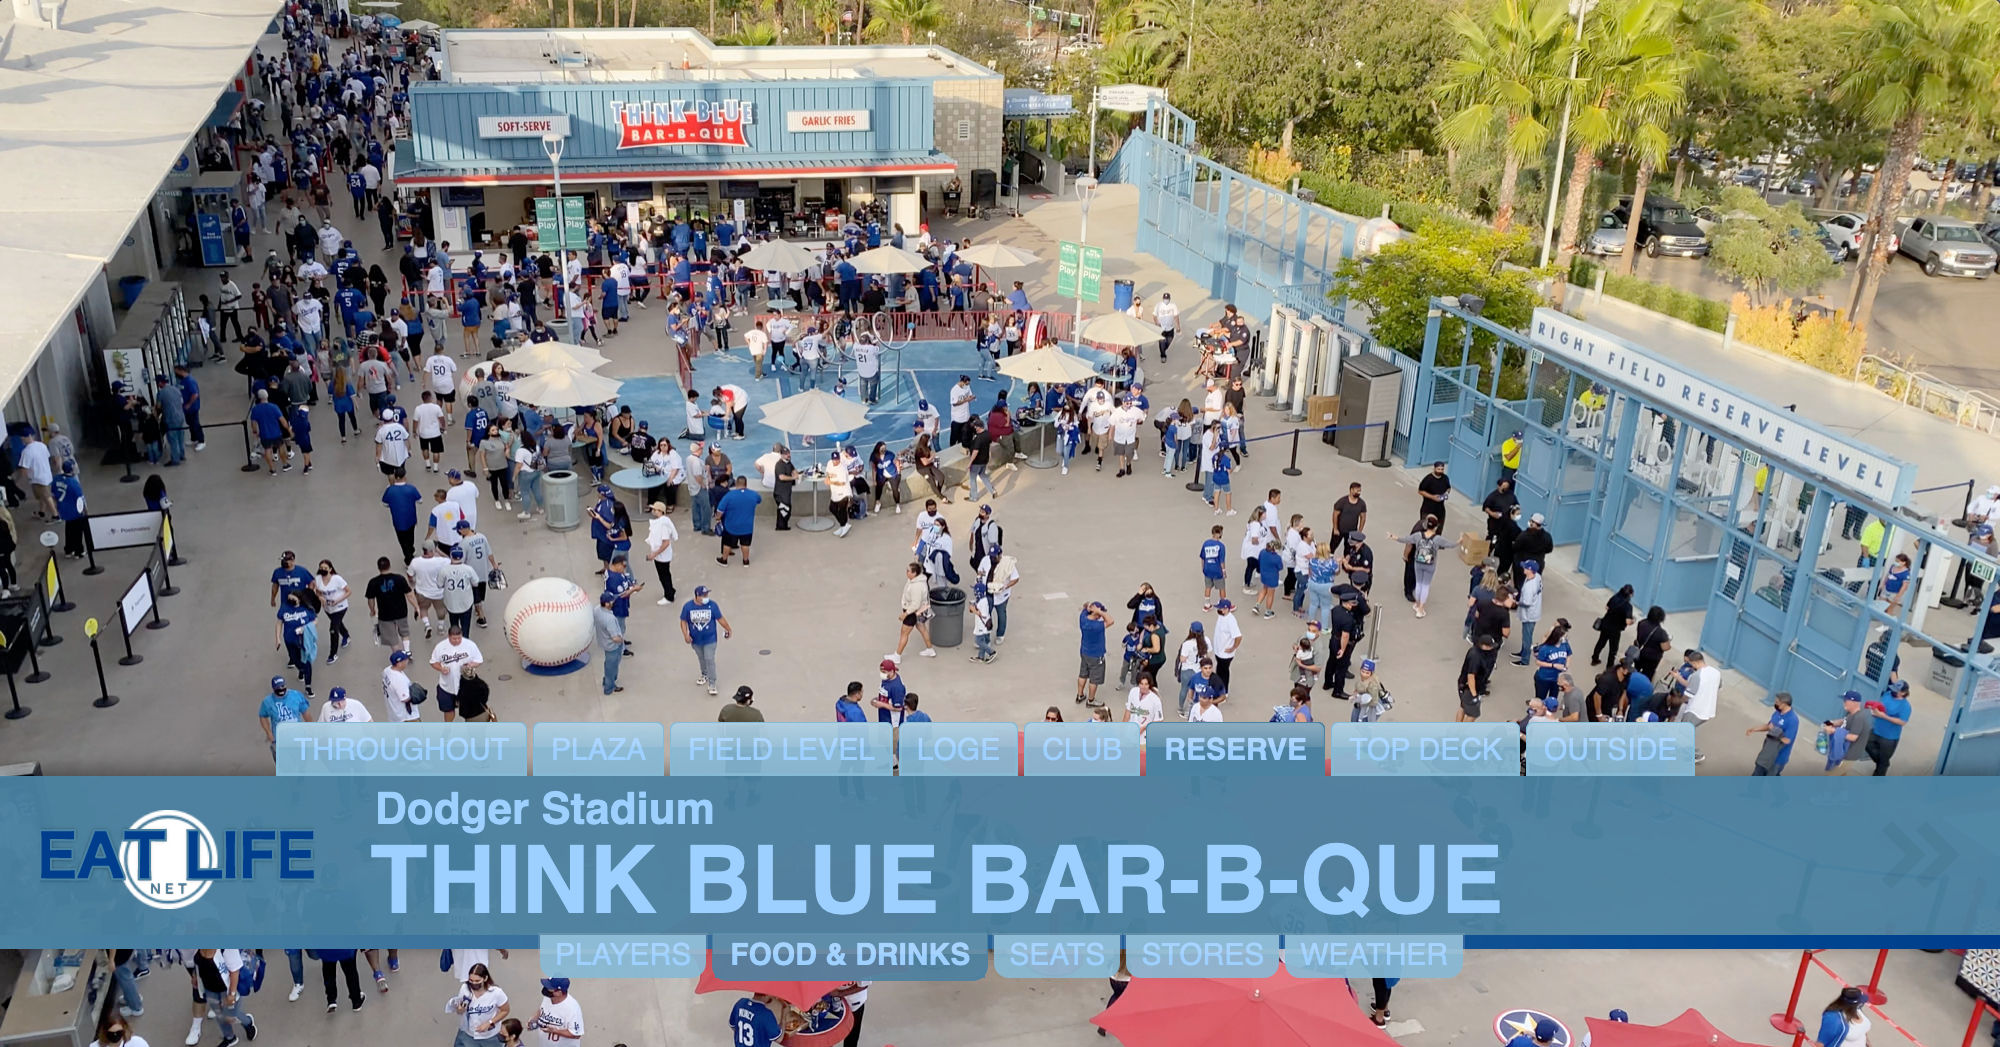 Think Blue Bar-B-Que